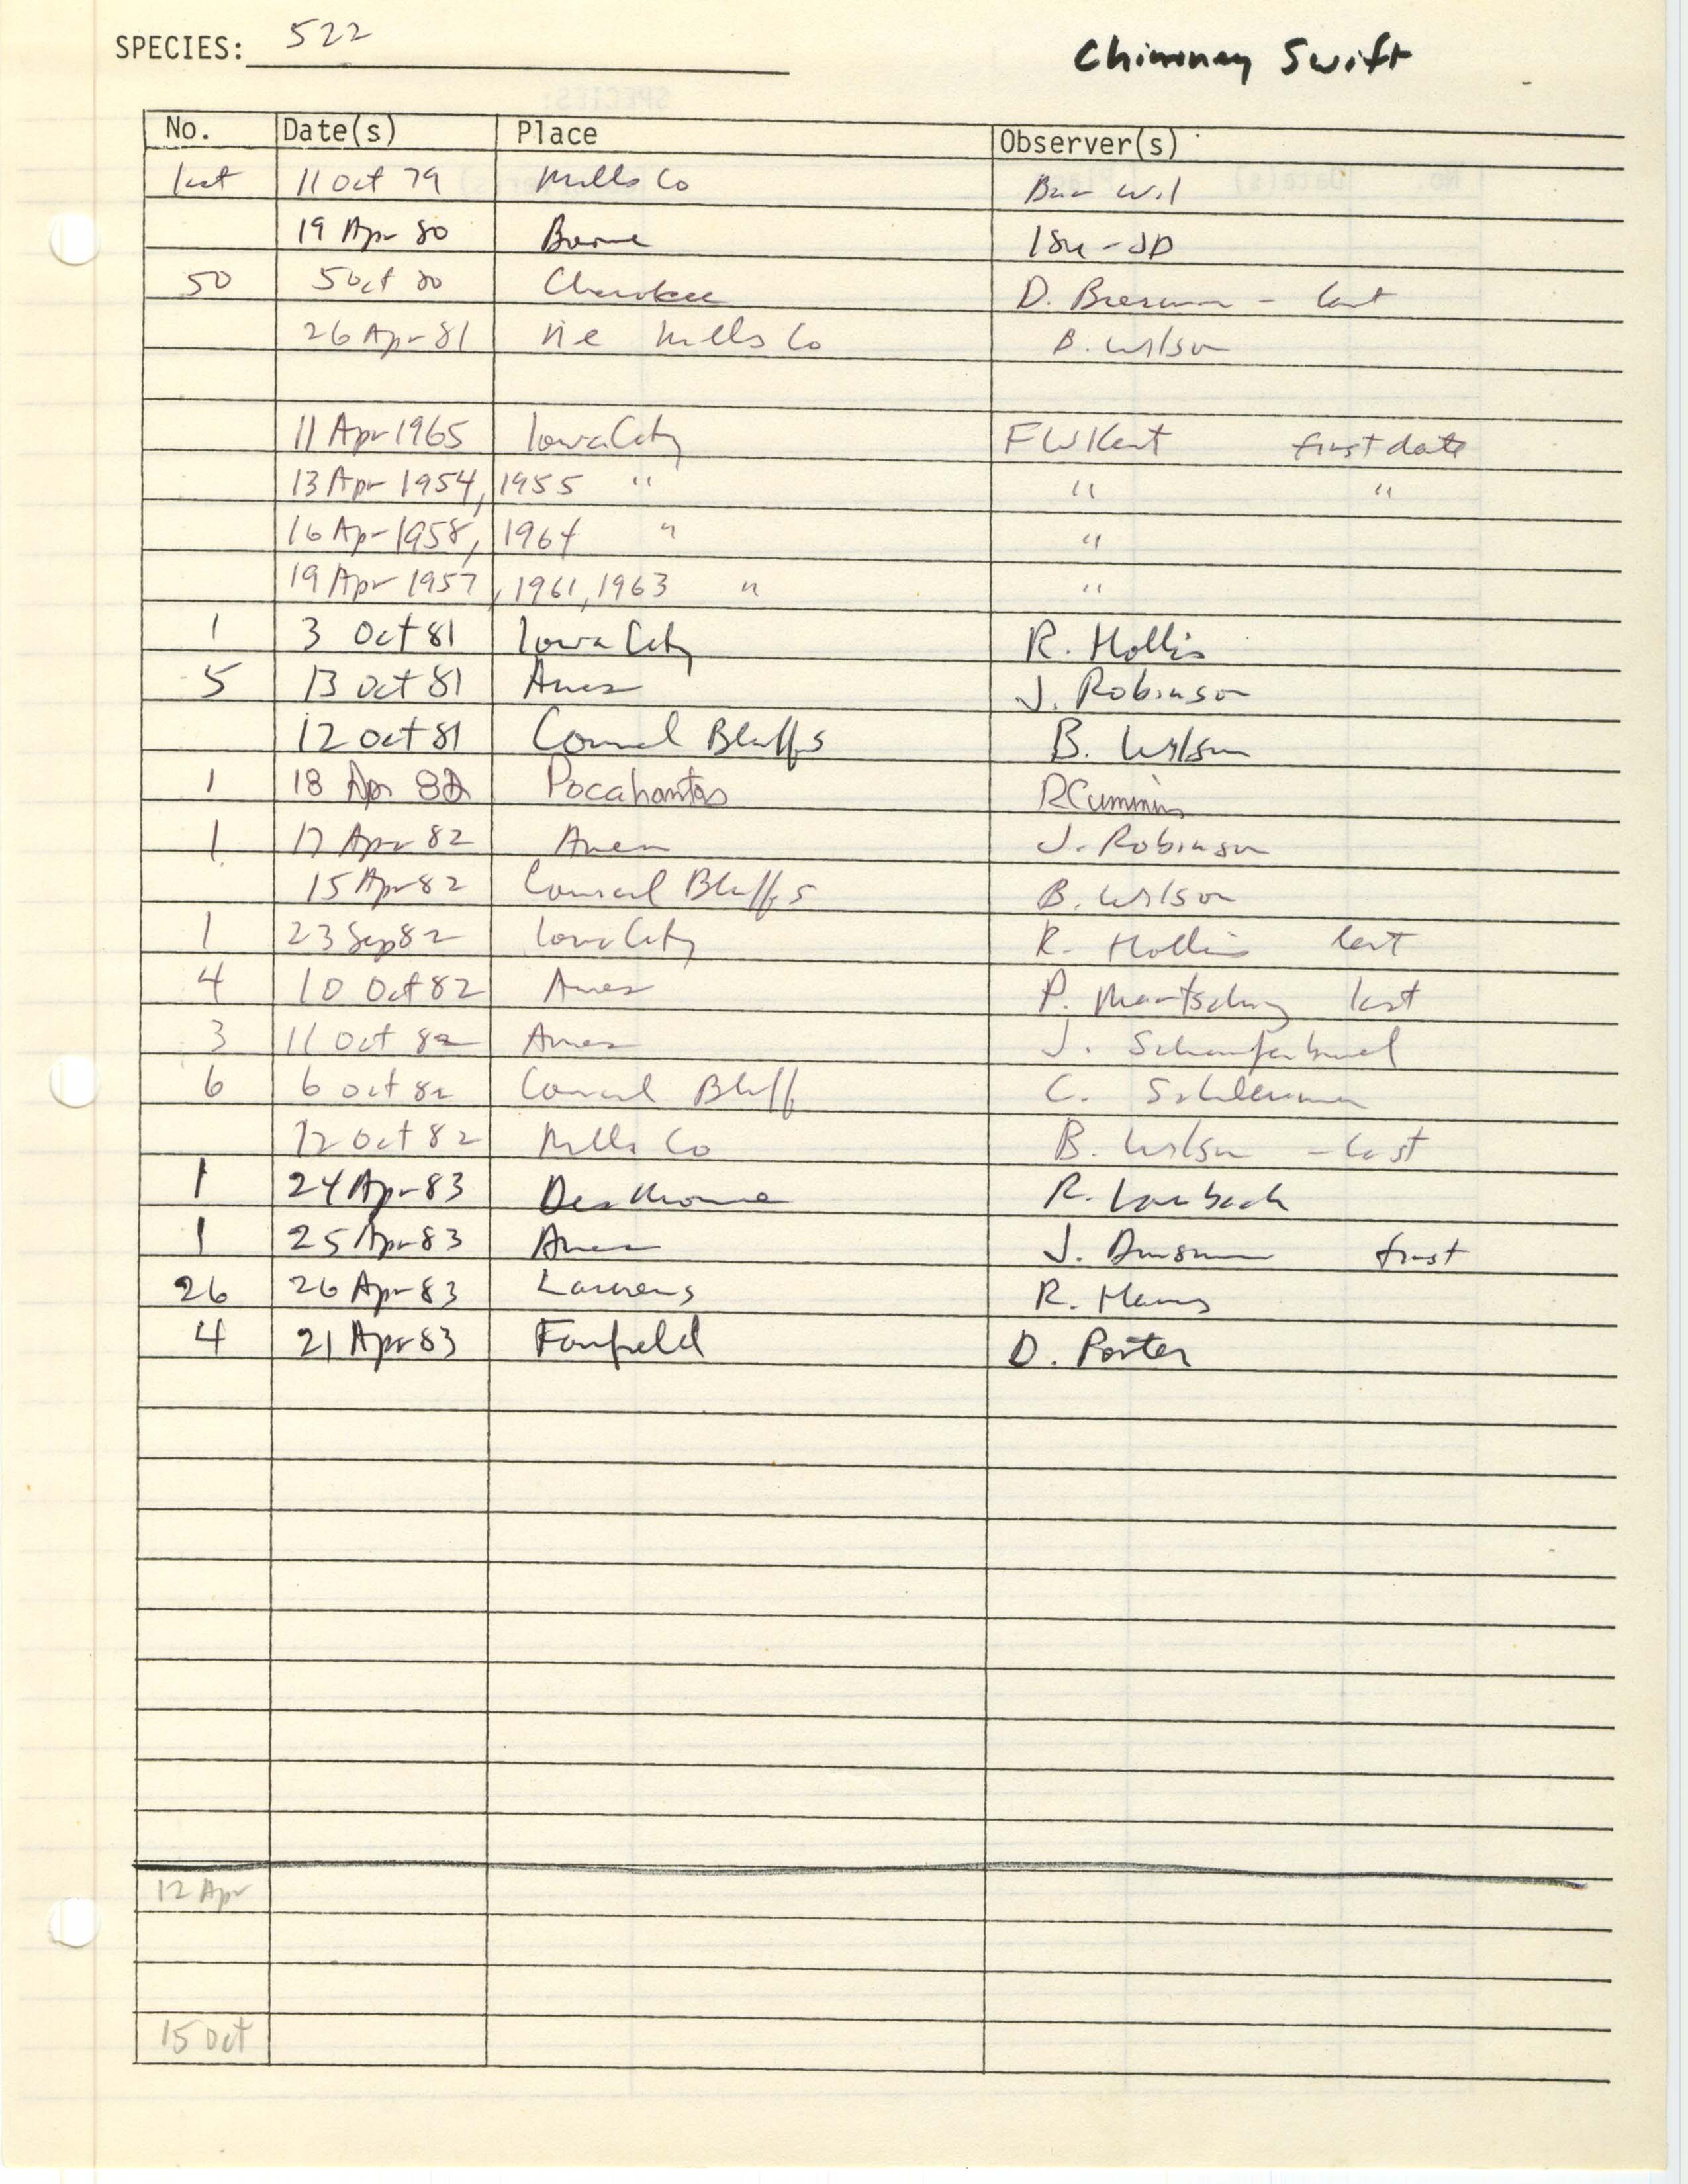 Iowa Ornithologists' Union, field report compiled data, Chimney Swift, 1954-1983